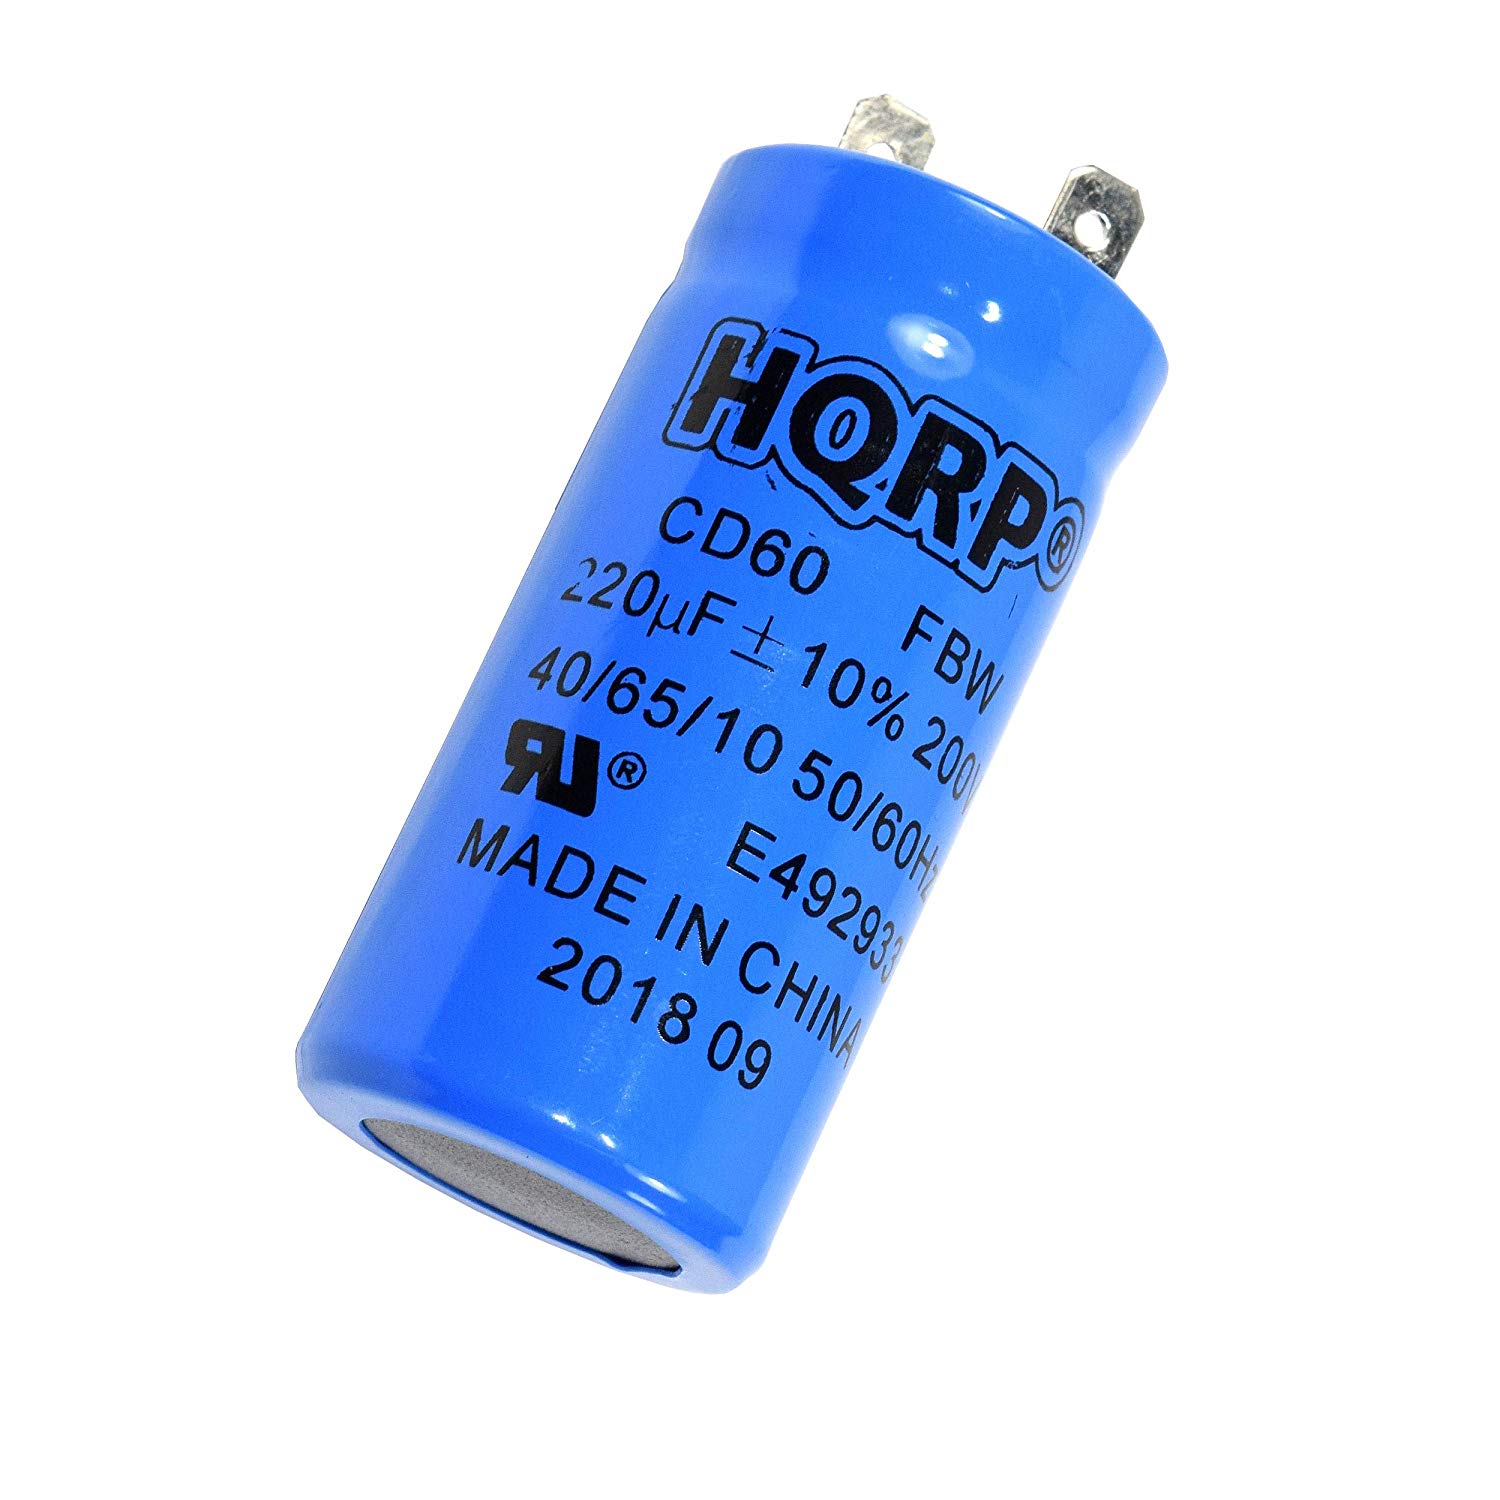 HQRP Start Capacitor for Coleman Powermate 220UF 200V 0034819.01 003481901 PC0545305.02 PL0542200 PL0544000 PL0544200 PL0544302